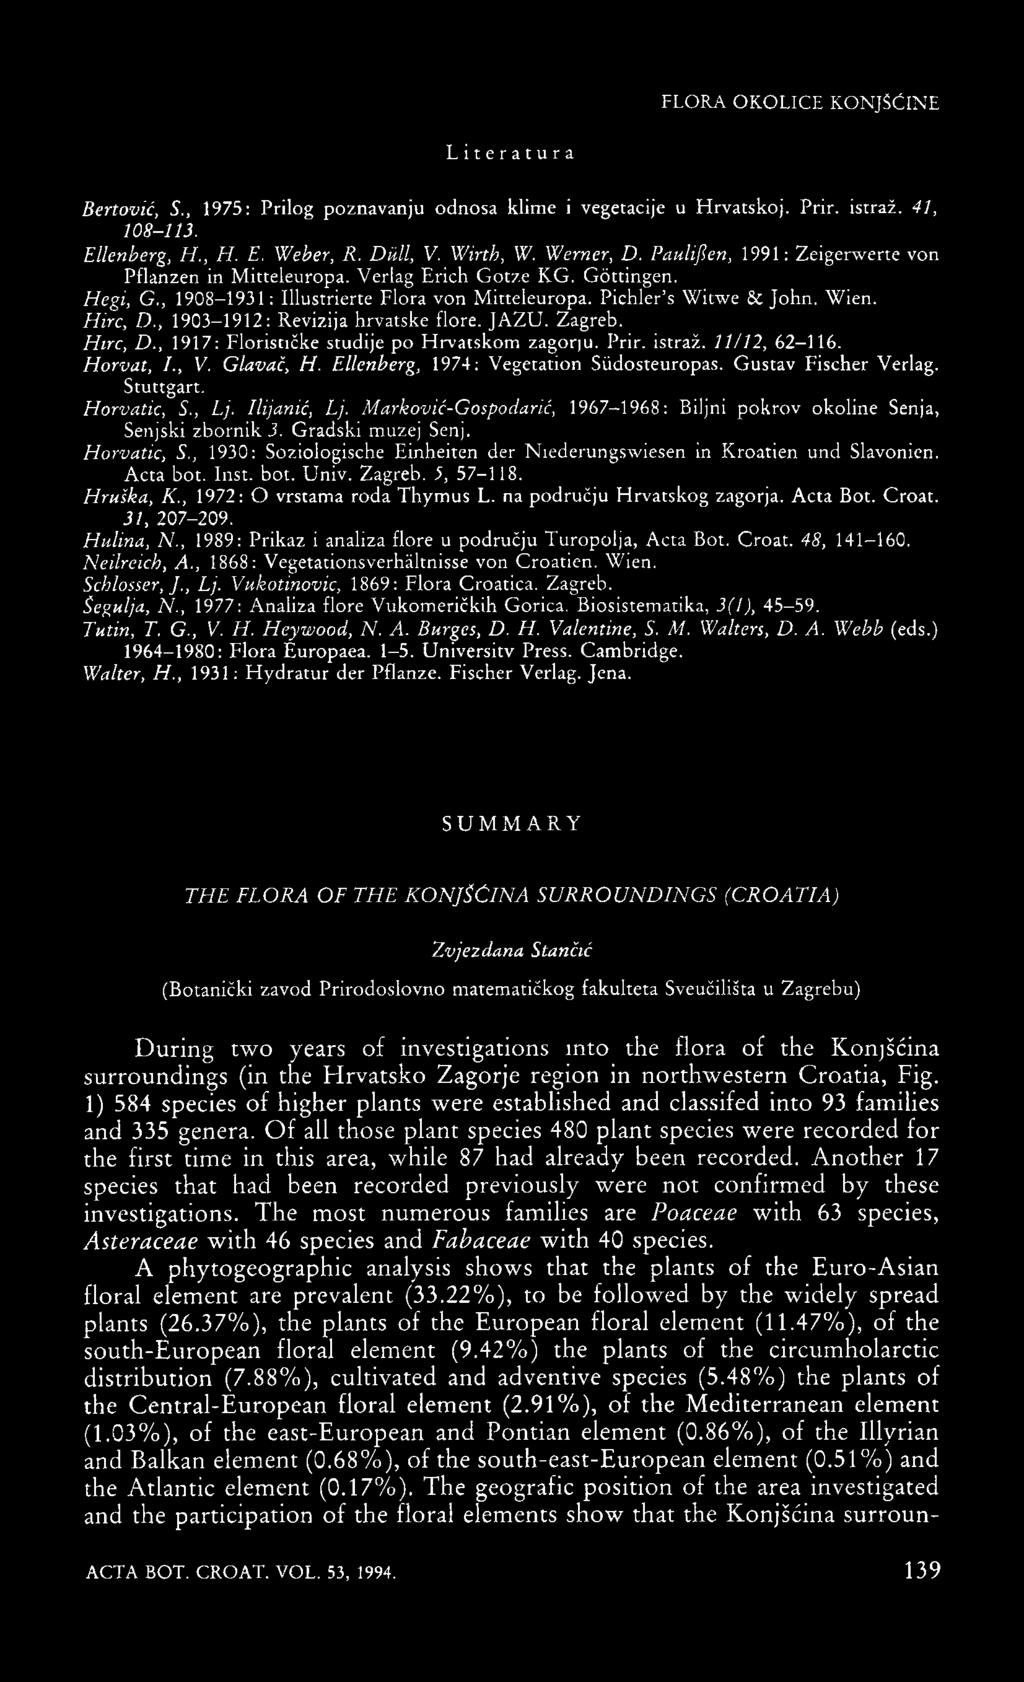 , 1903-1912: Revizija hrvatske flore. JAZU. Zagreb. Hire, D., 1917: Florističke studije po Hrvatskom zagoriu. Prir. istraž. 11/12, 62-116. H orvat, I., V. G lavač, H.